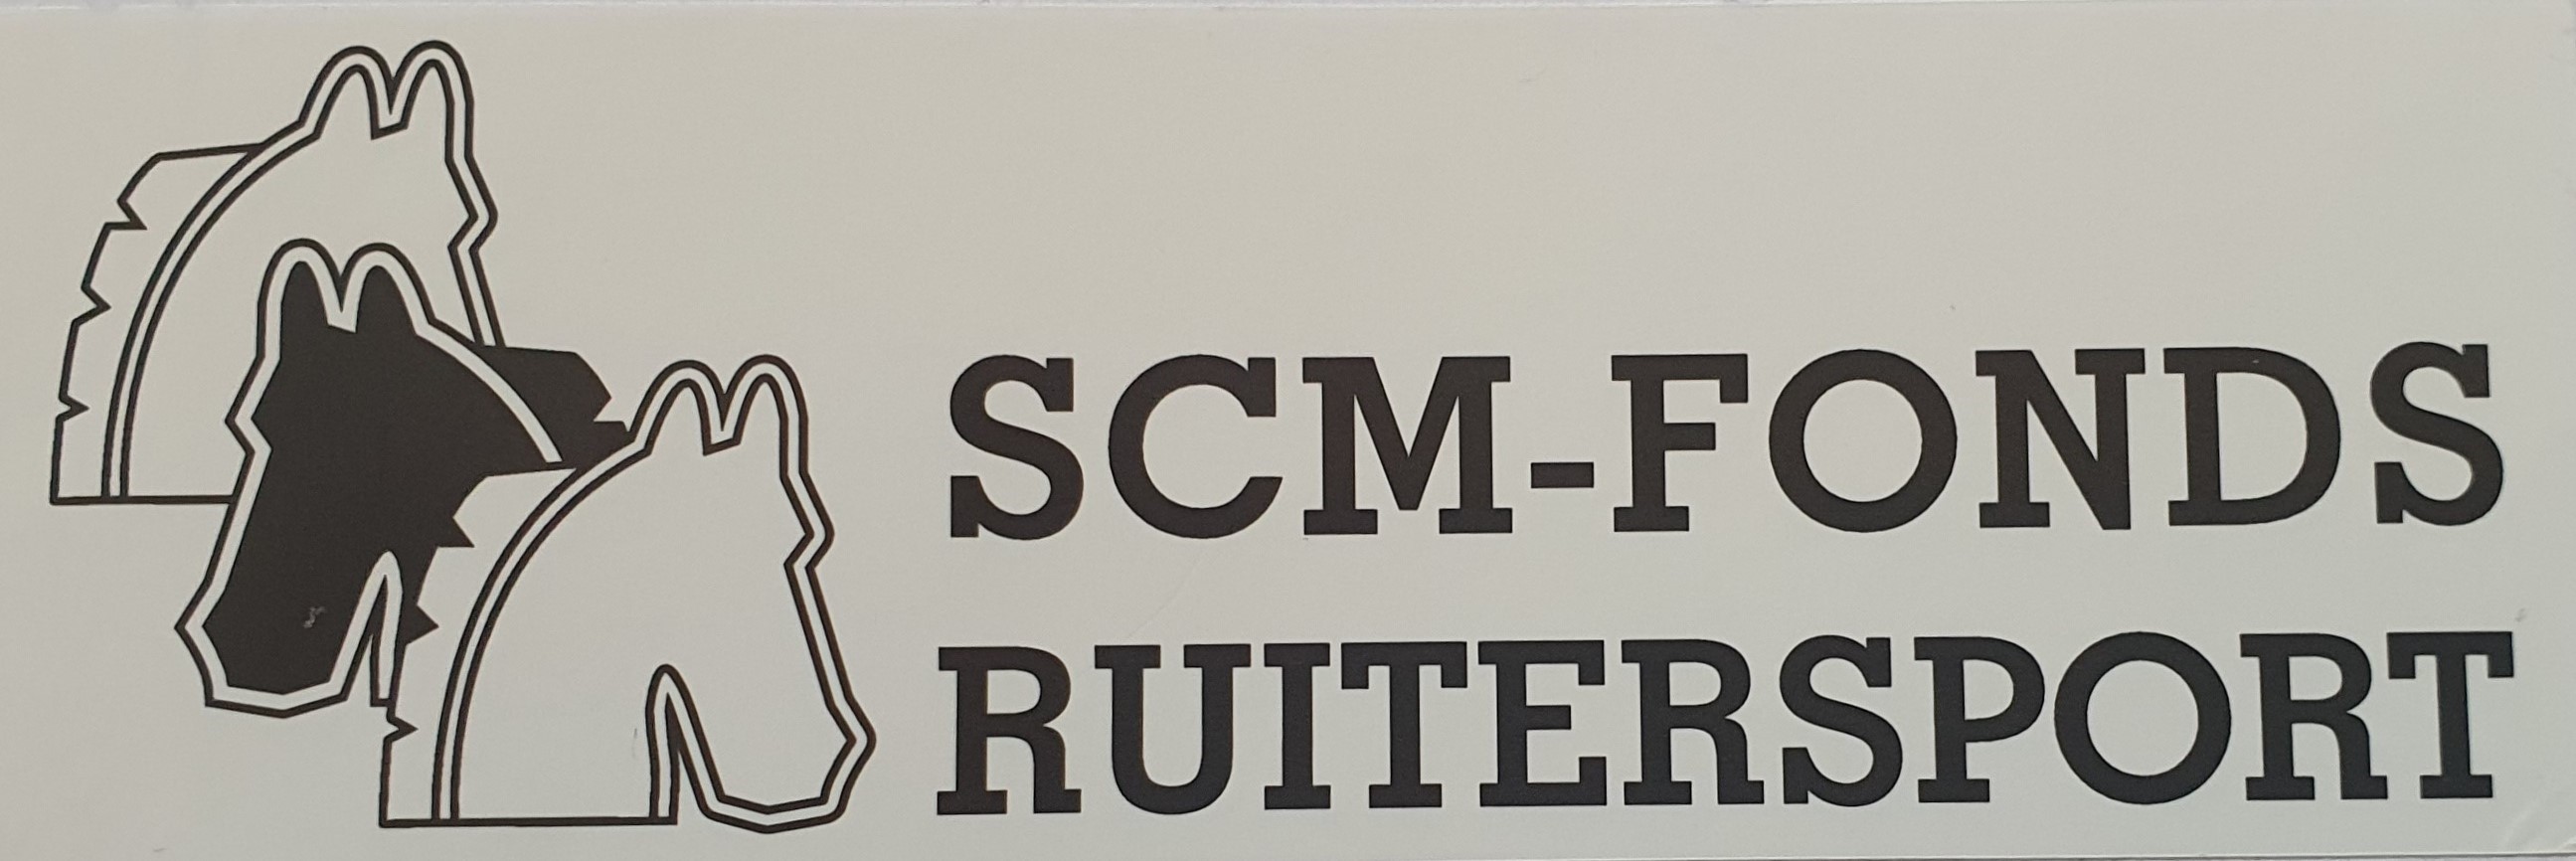 logo SCM-fonds ruitersport